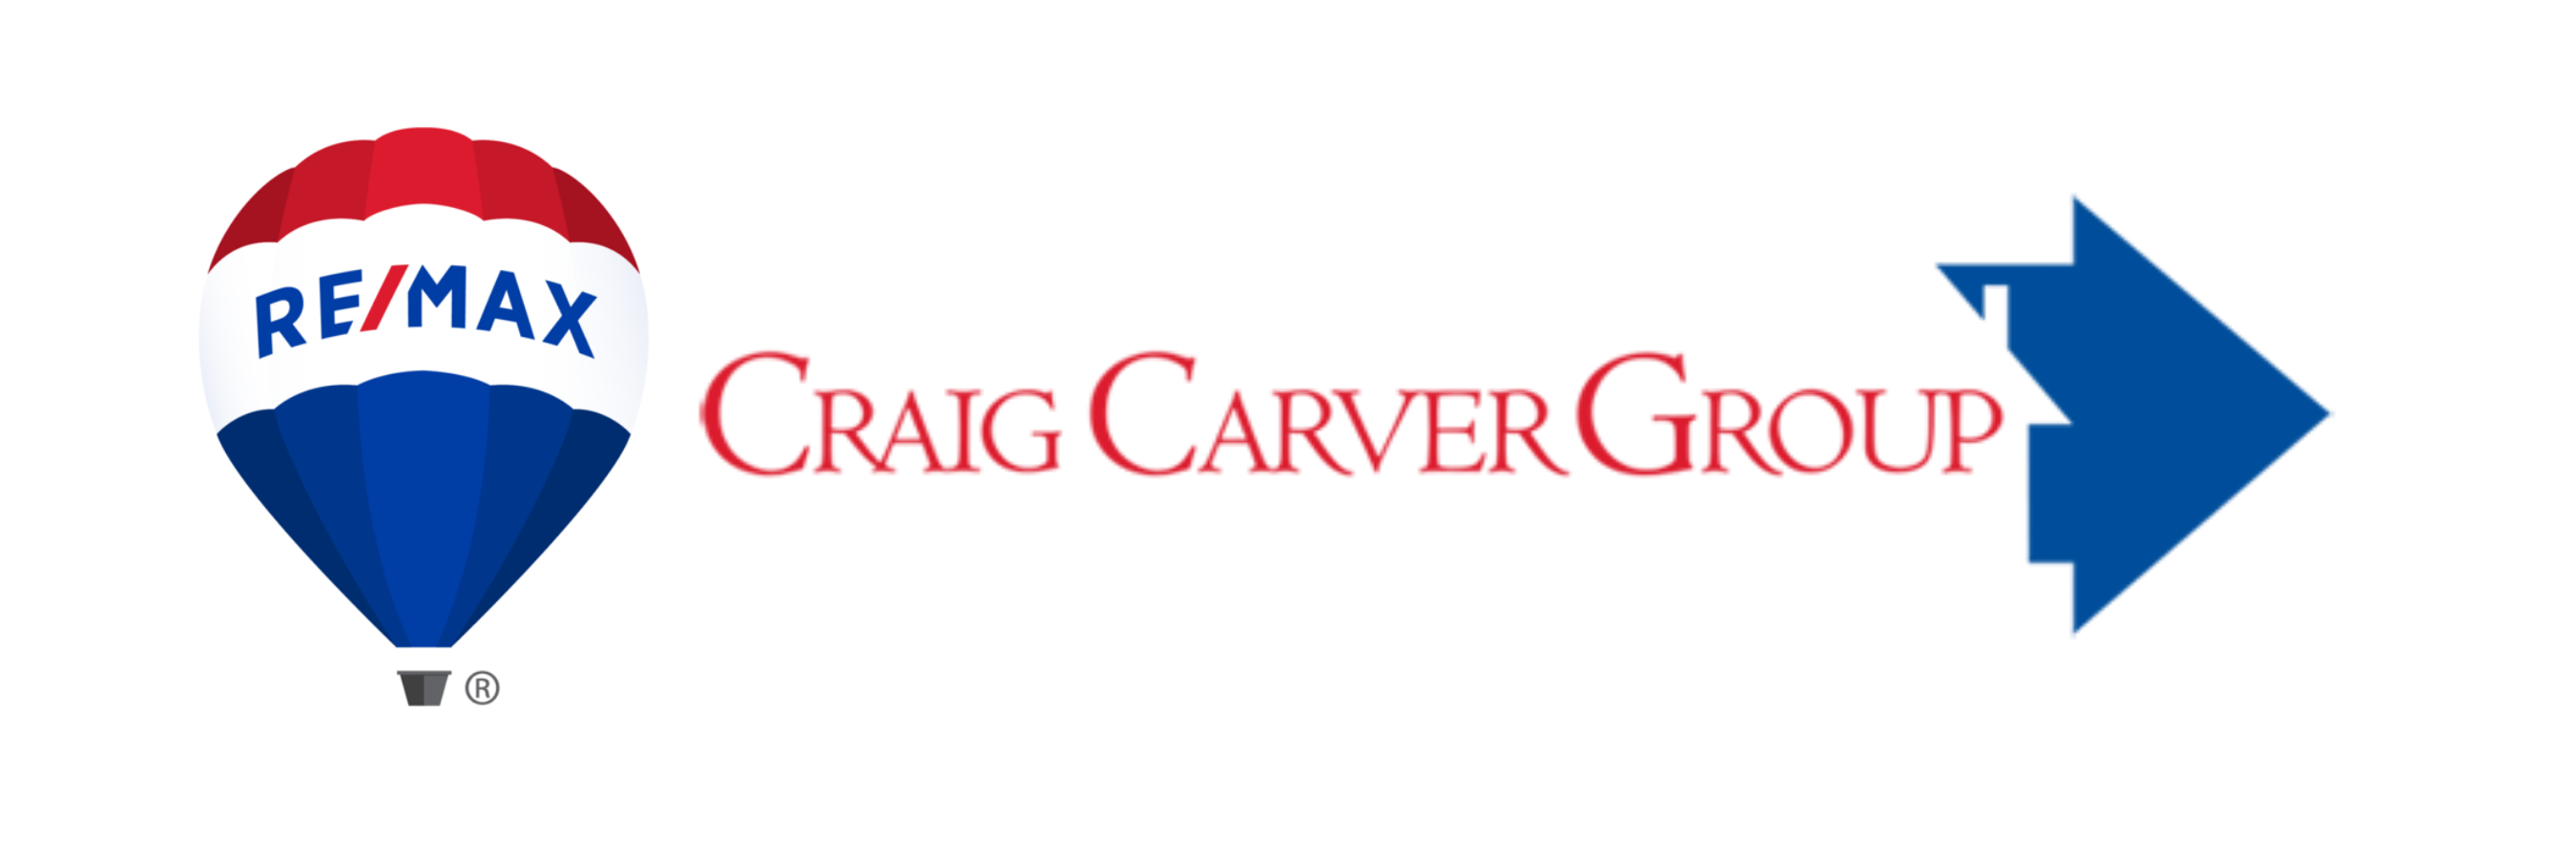 Craig Carver Group - RE/MAX 